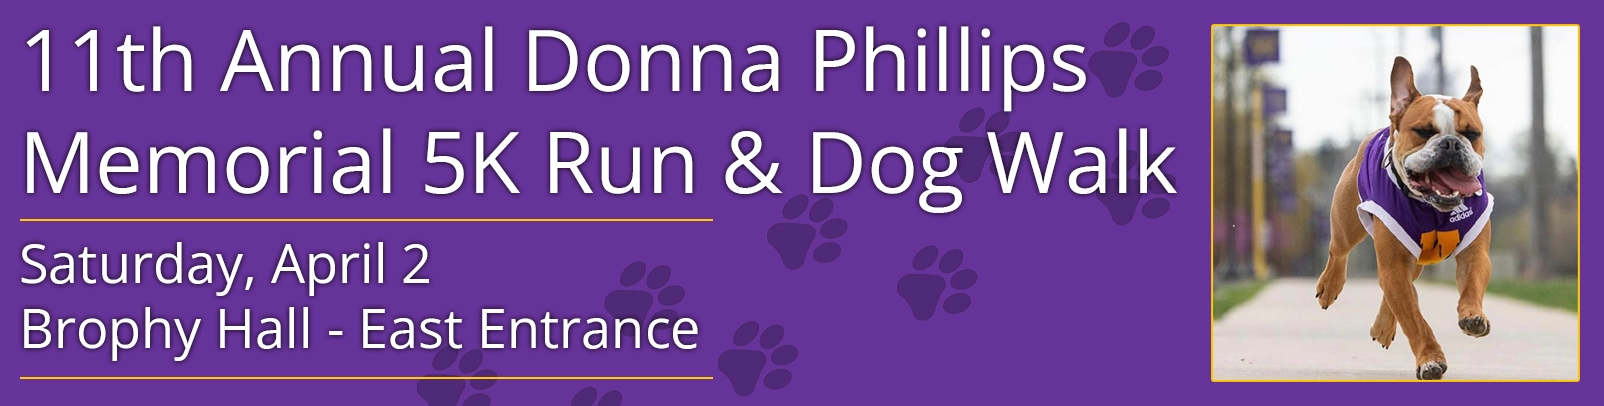 11th Annual Donna Phillips Memorial 5K Run & Dog Walk